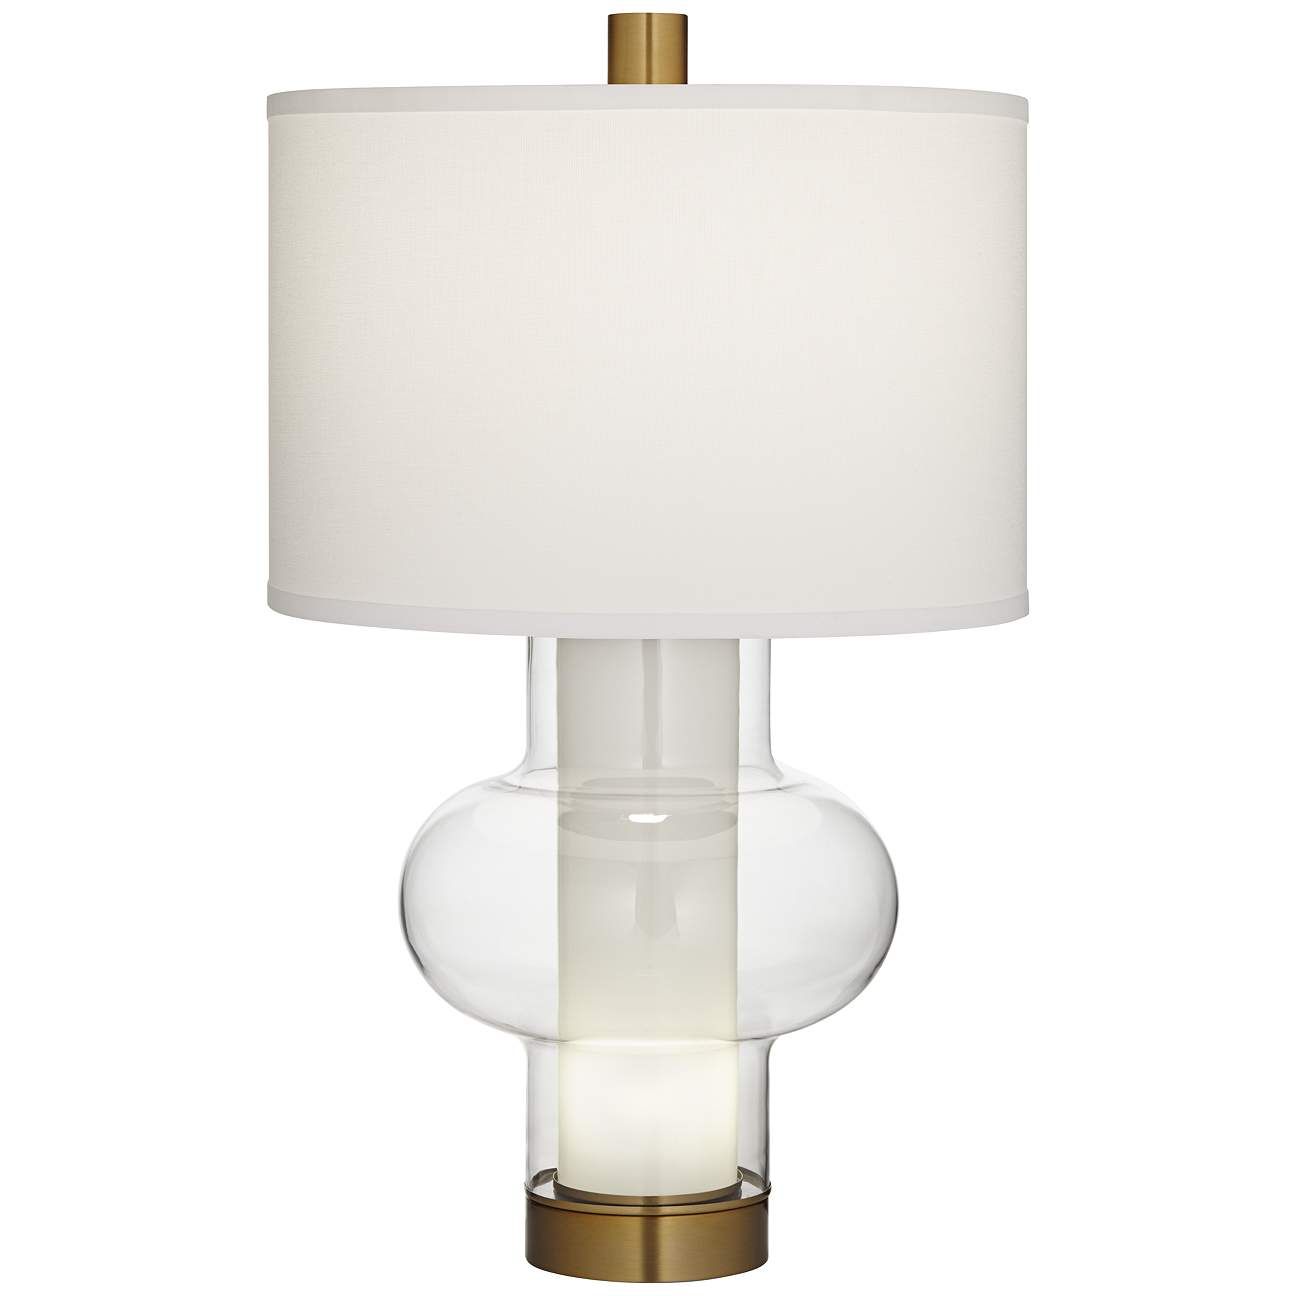 Possini Euro Design Blake Modern Glass Night Light Table Lamp | Lamps Plus